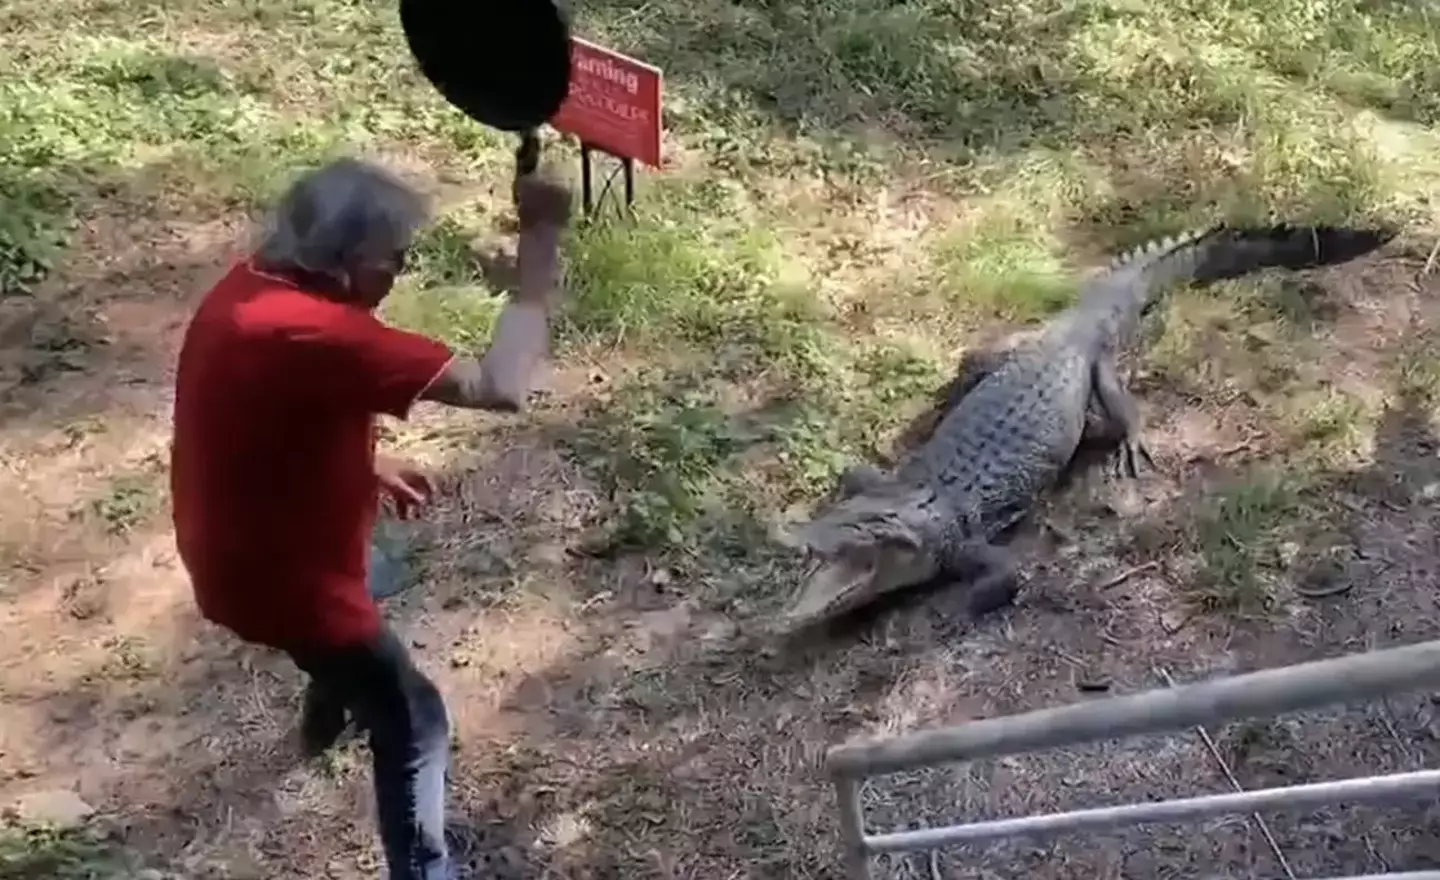 An Australian man was caught on camera fending off an enormous crocodile.